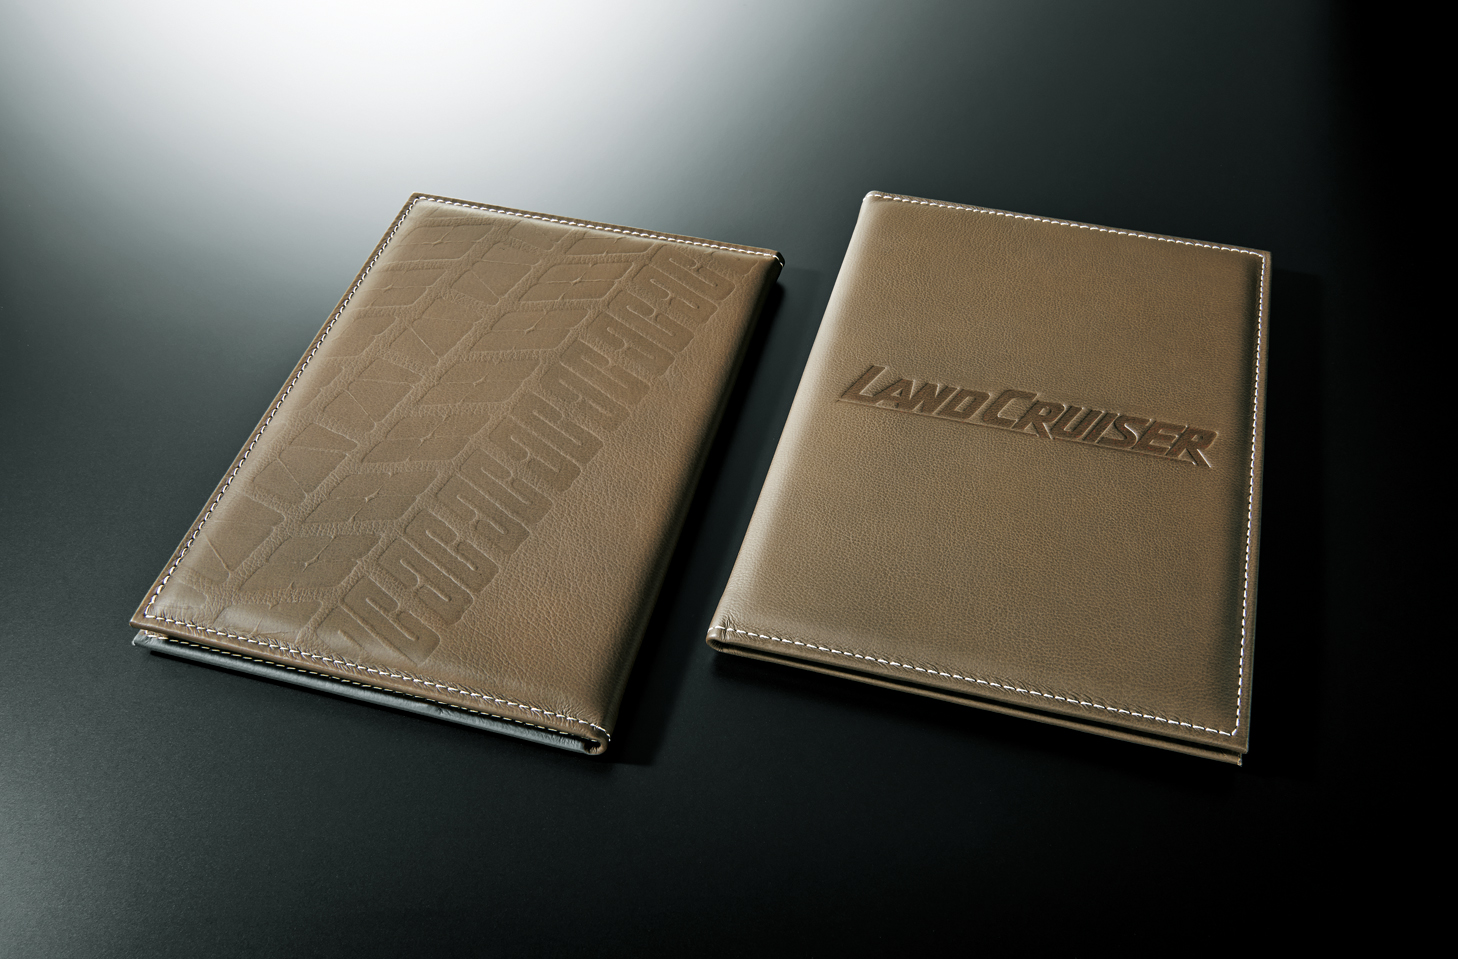 Land Cruiser 70 series 30th anniversary commemorative leather maintenance record holder